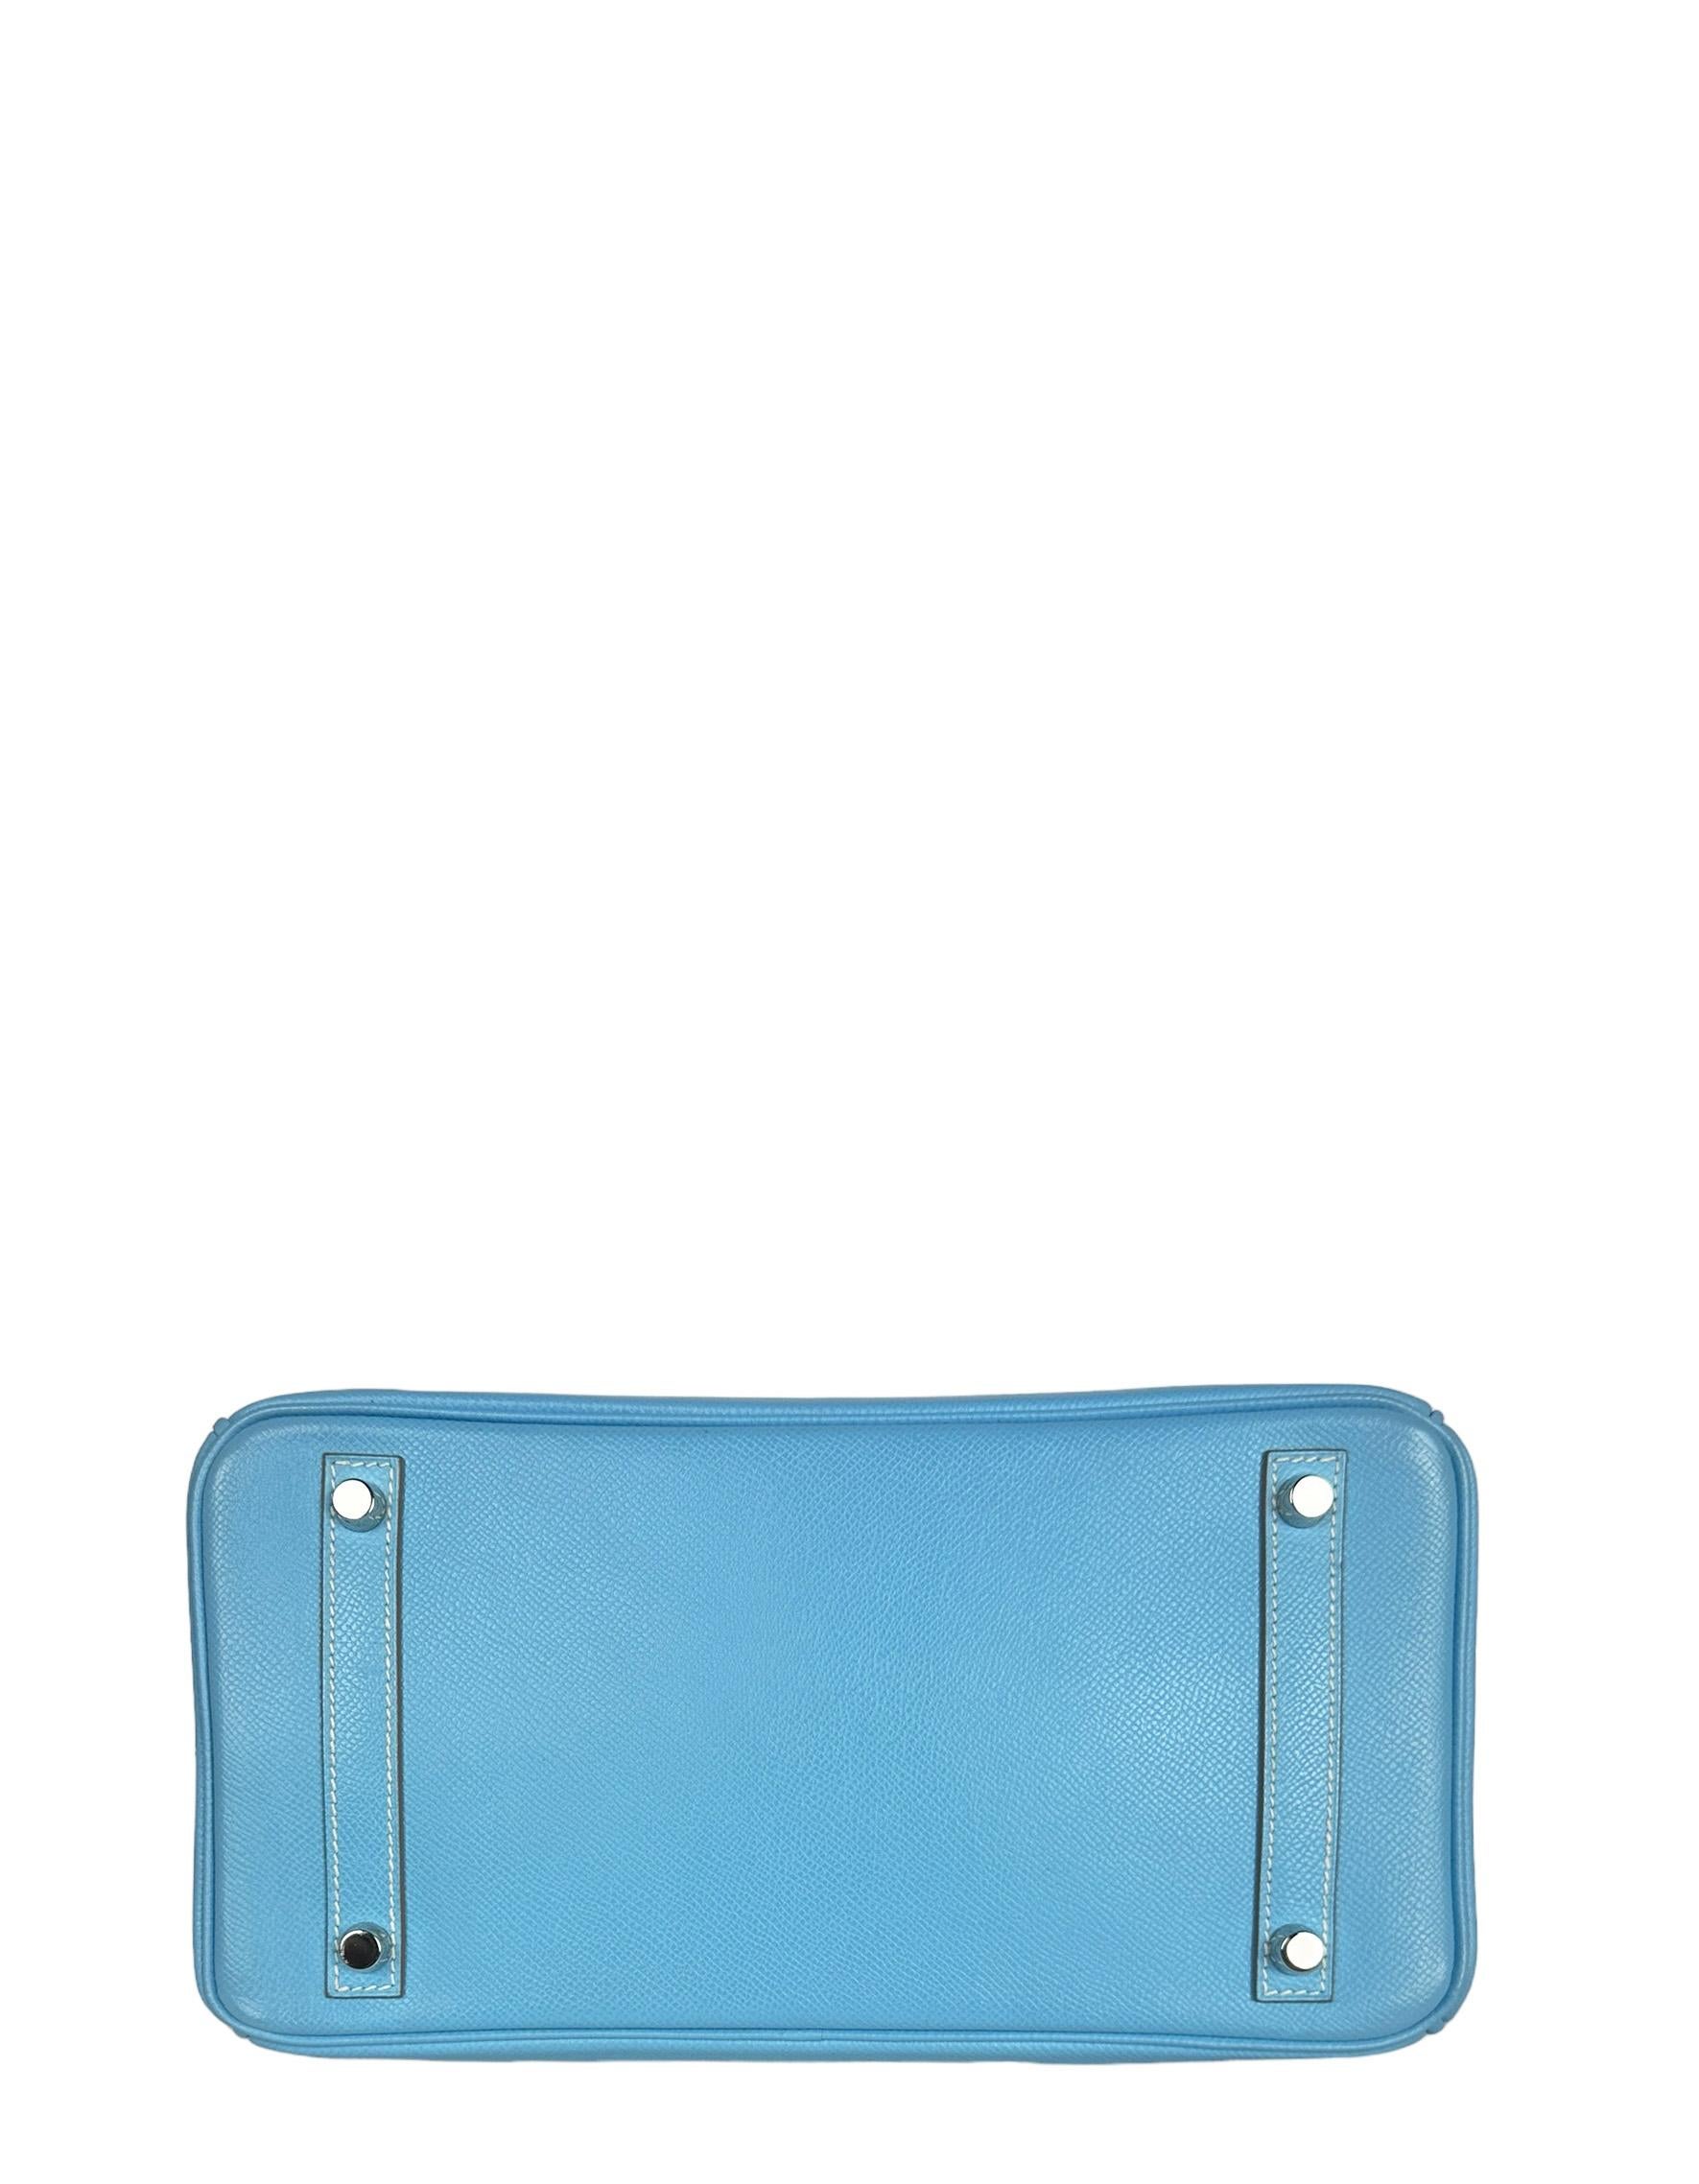 Hermes Blue Celeste/ Mykonos Epsom Leather 30cm Candy Birkin Bag PHW 3